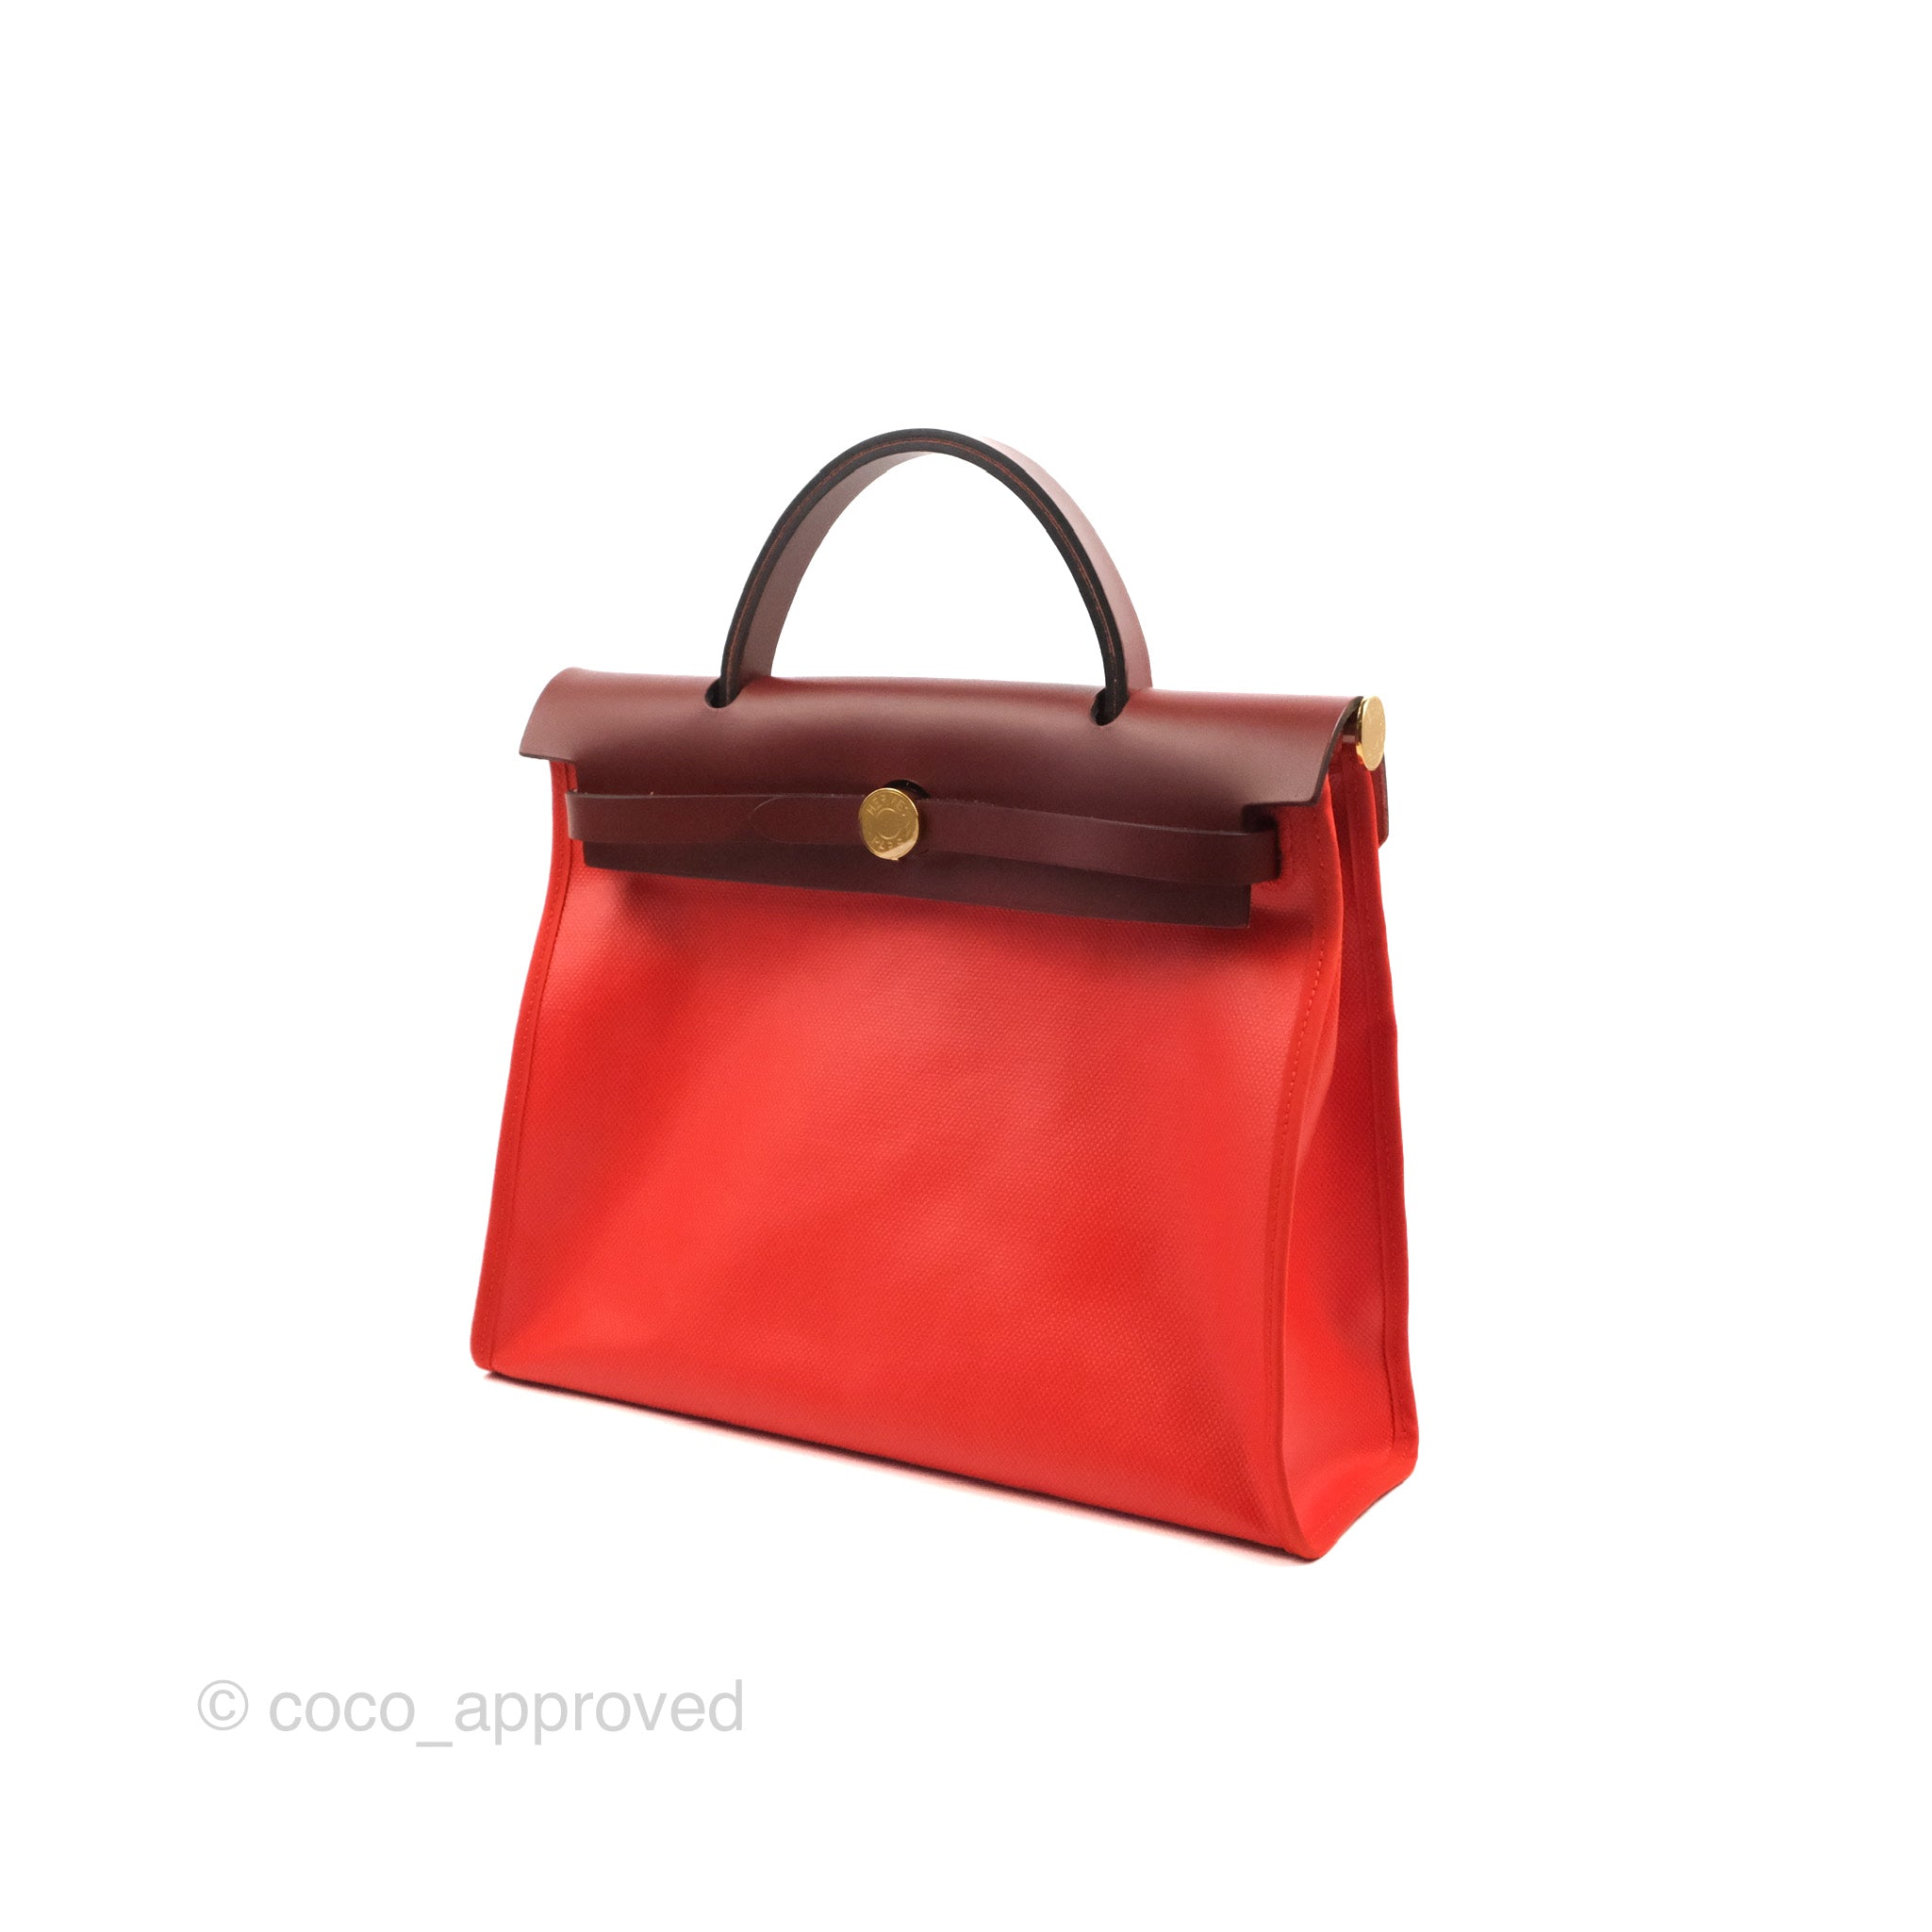 Hermès - Hermès Herbag Zip 31 Canvas Handbag-Poppy Orange with Orange Enamel Buckle